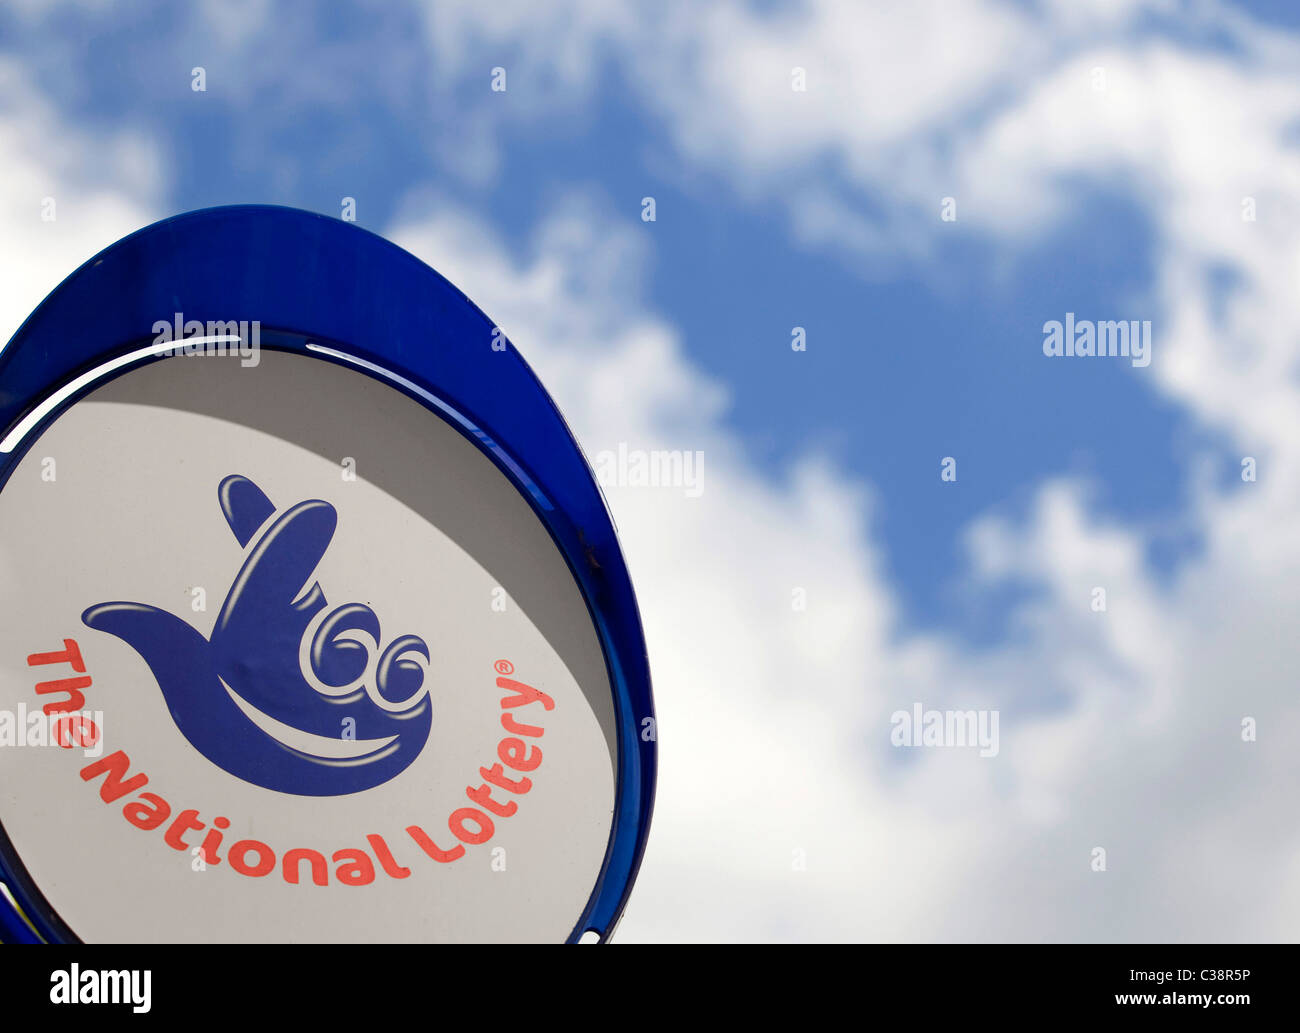 Illustrative image of National Lottery branding. Stock Photo